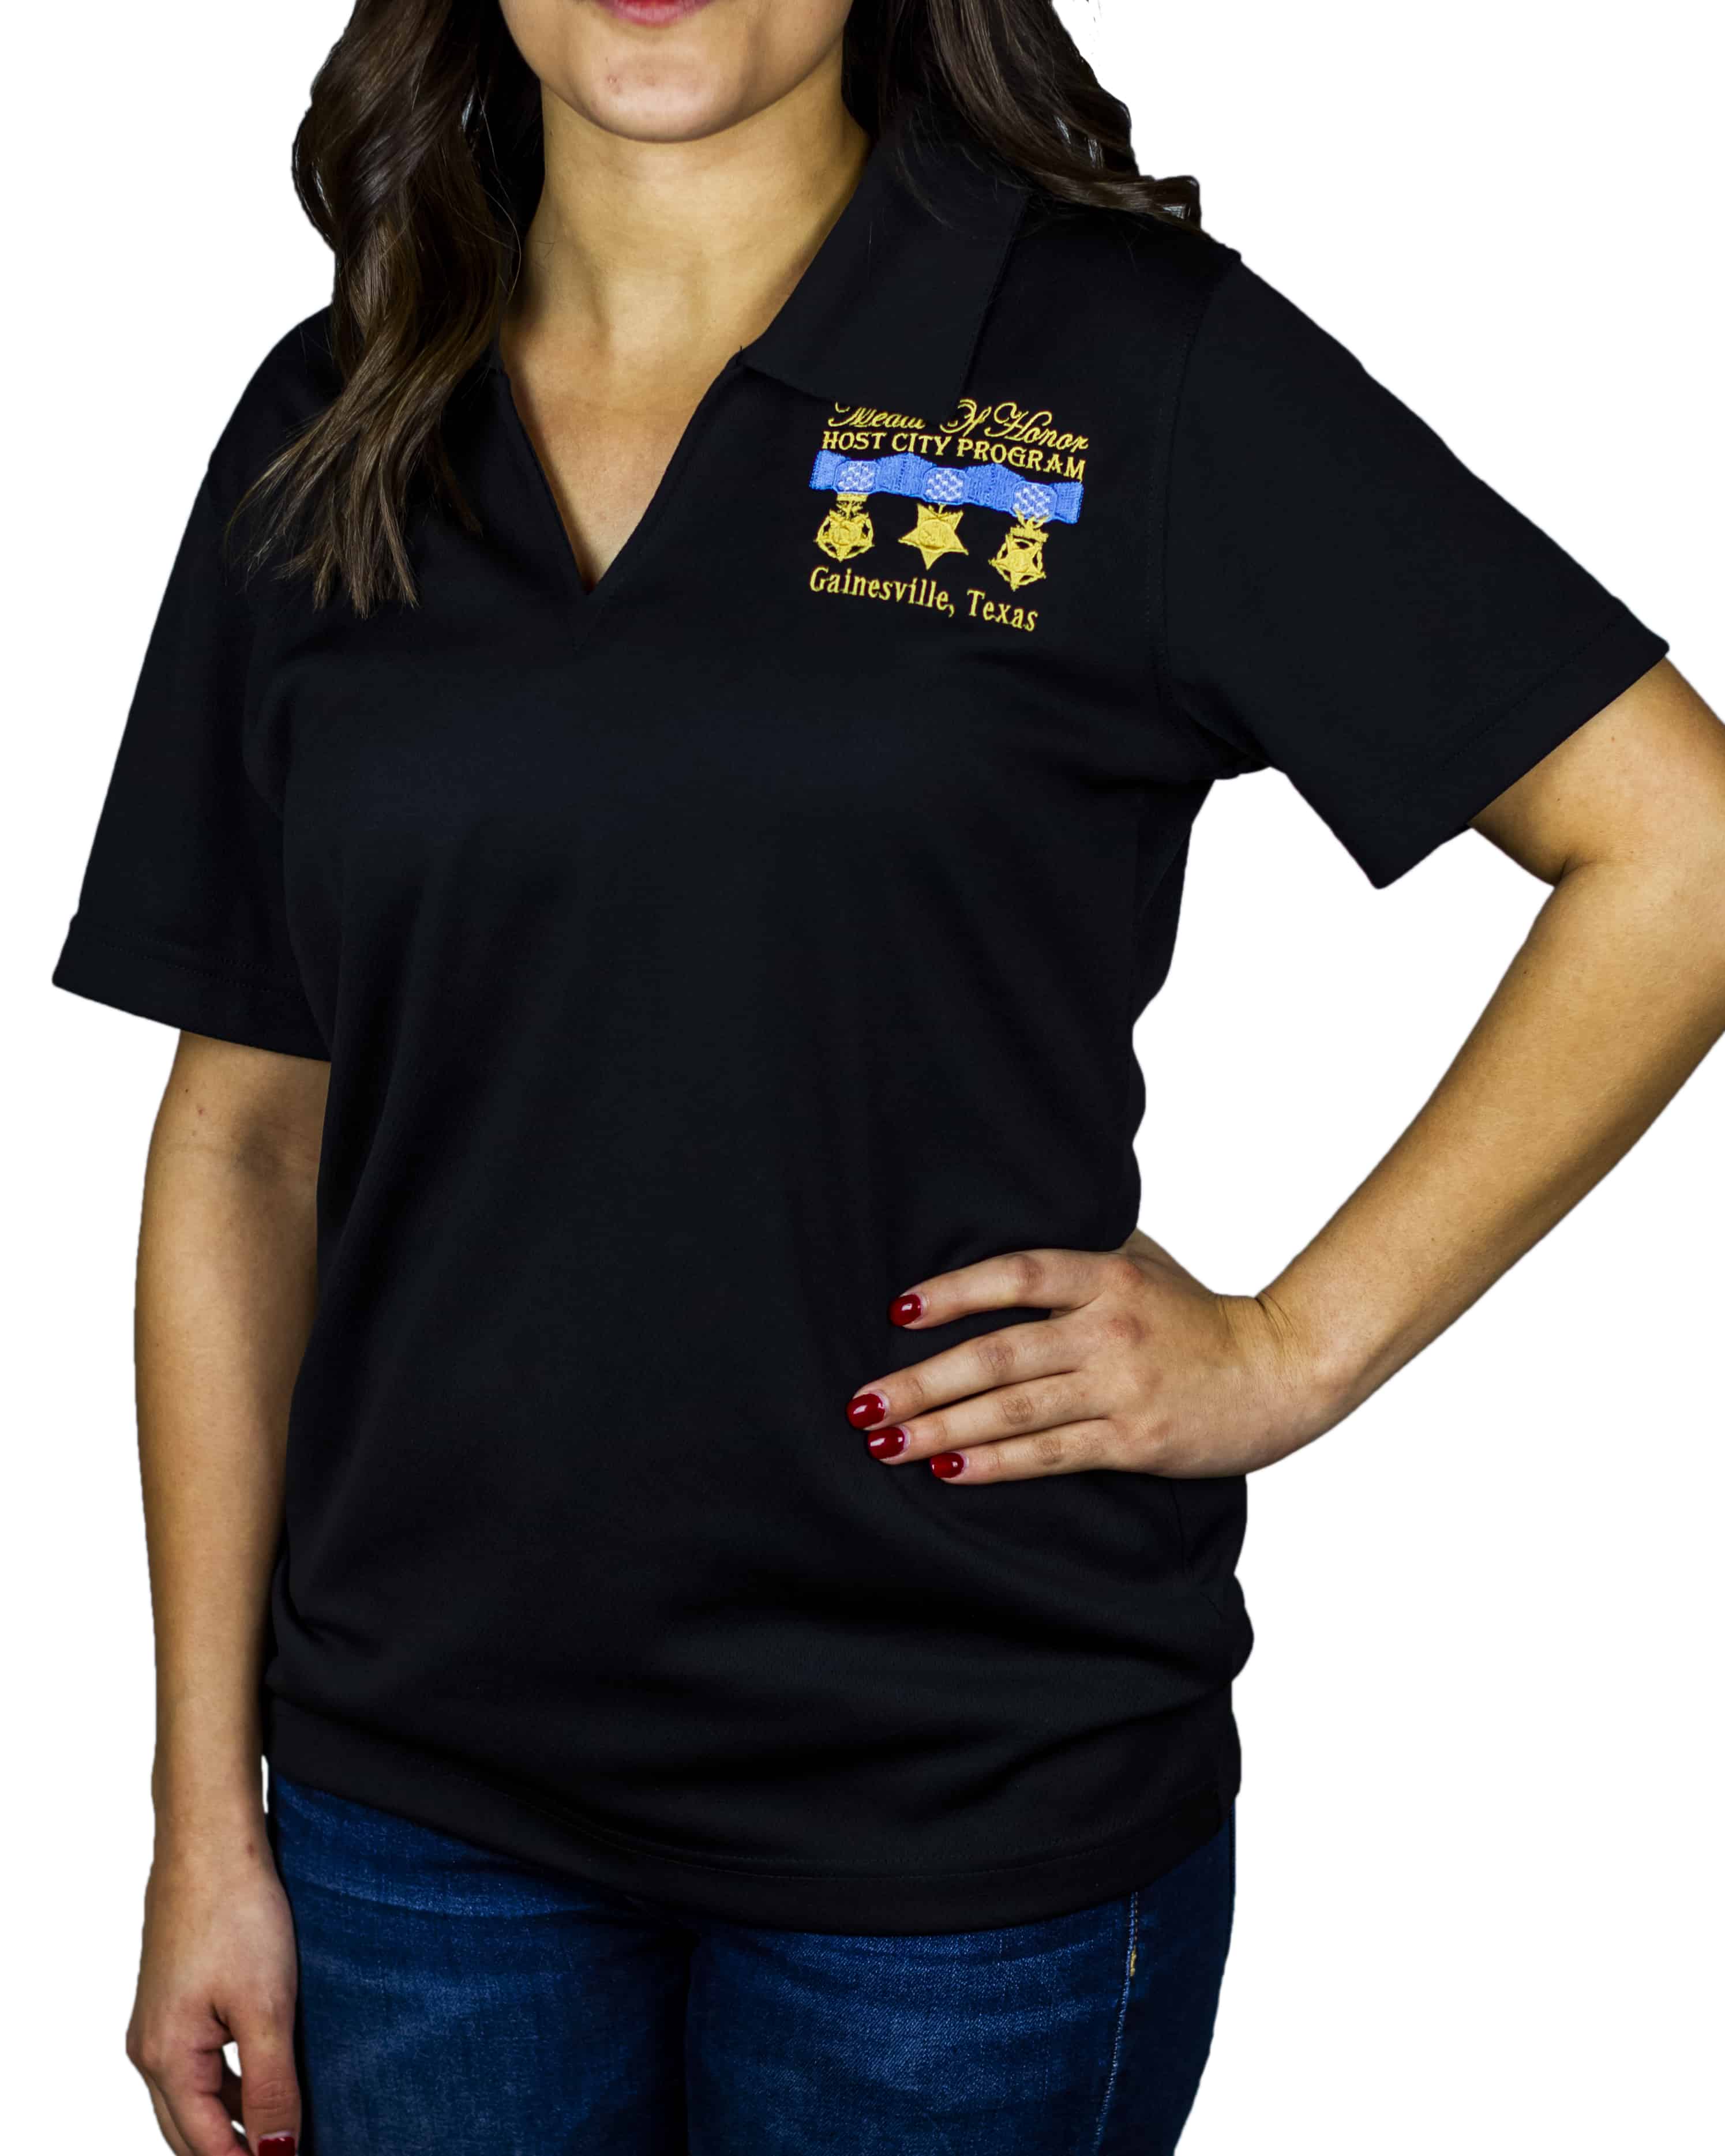 Ladies Polo Shirt – Medal of Honor Host City Program